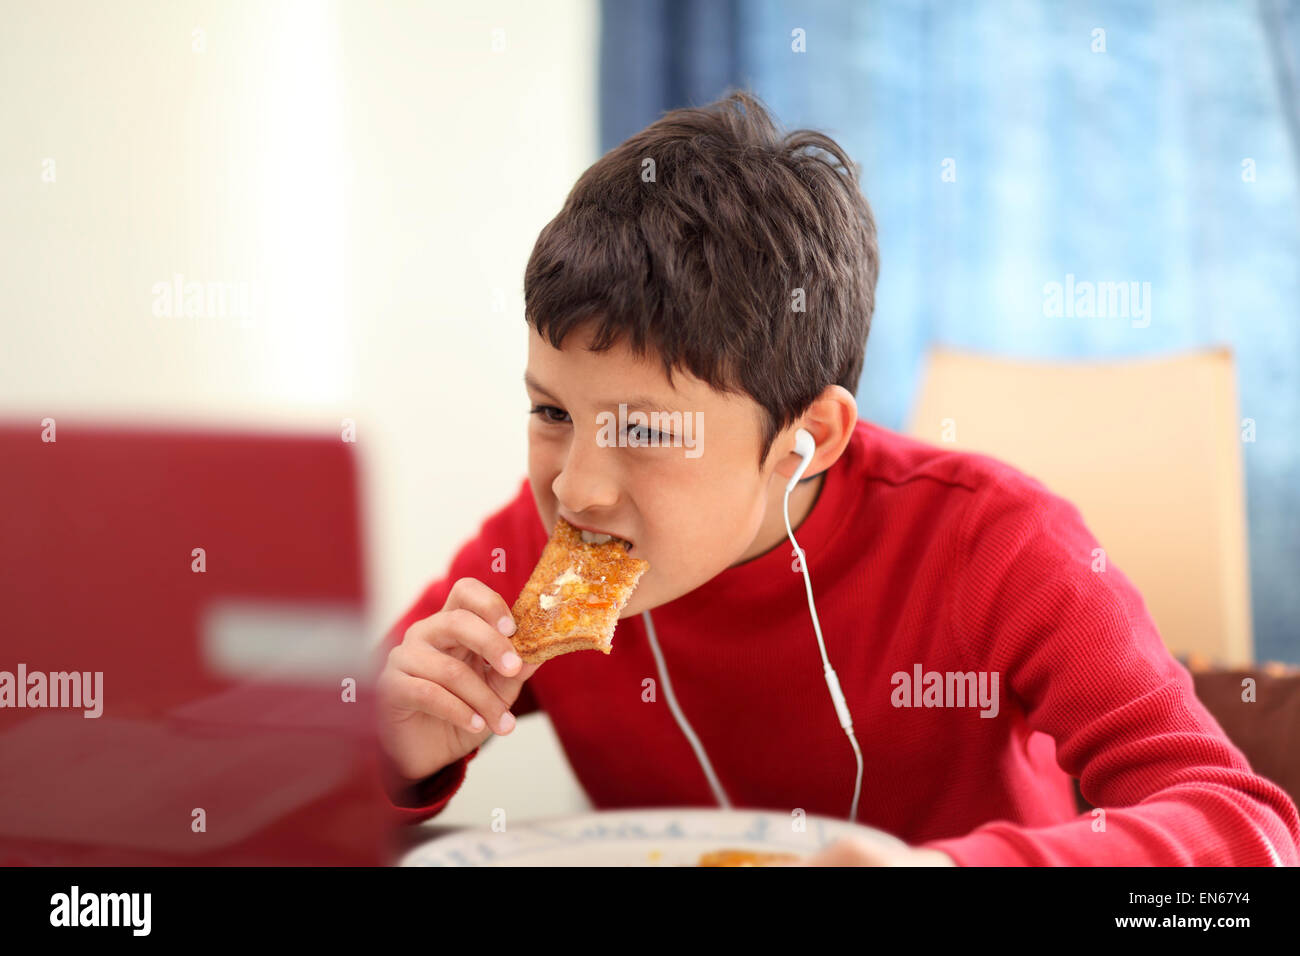 Young boy eating breakfast toast - faible profondeur de champ Banque D'Images